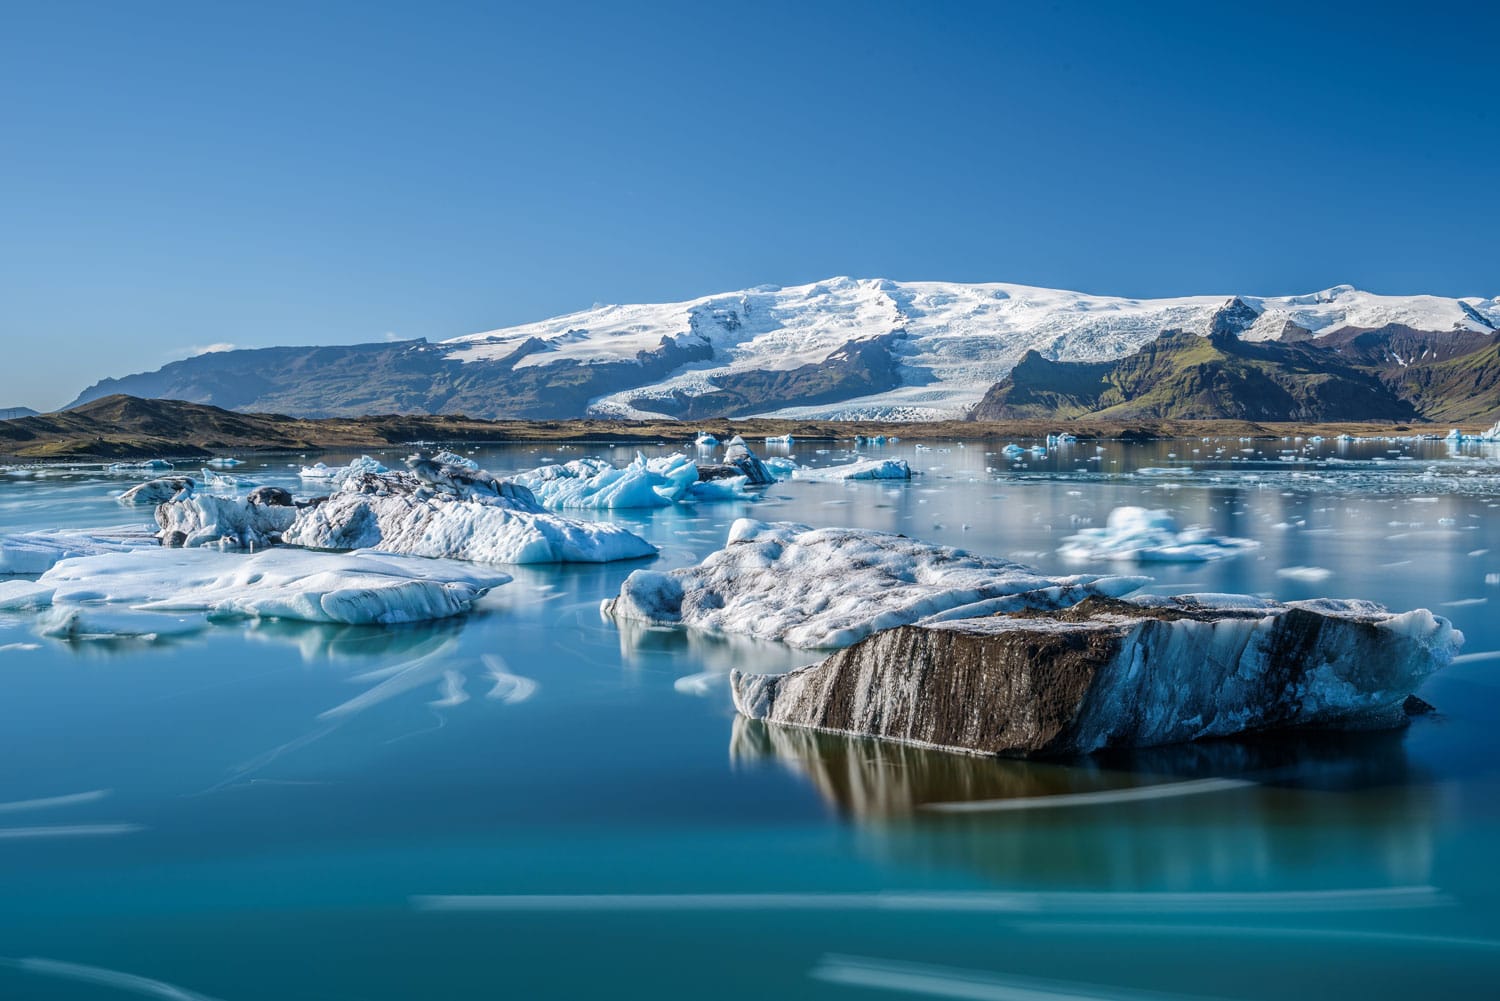 Floating icebergs in Jokulsarlon glacier lagoon, Iceland. Jokulsarlon is a glacial lake in southeast Iceland near Vatnajokull National Park.